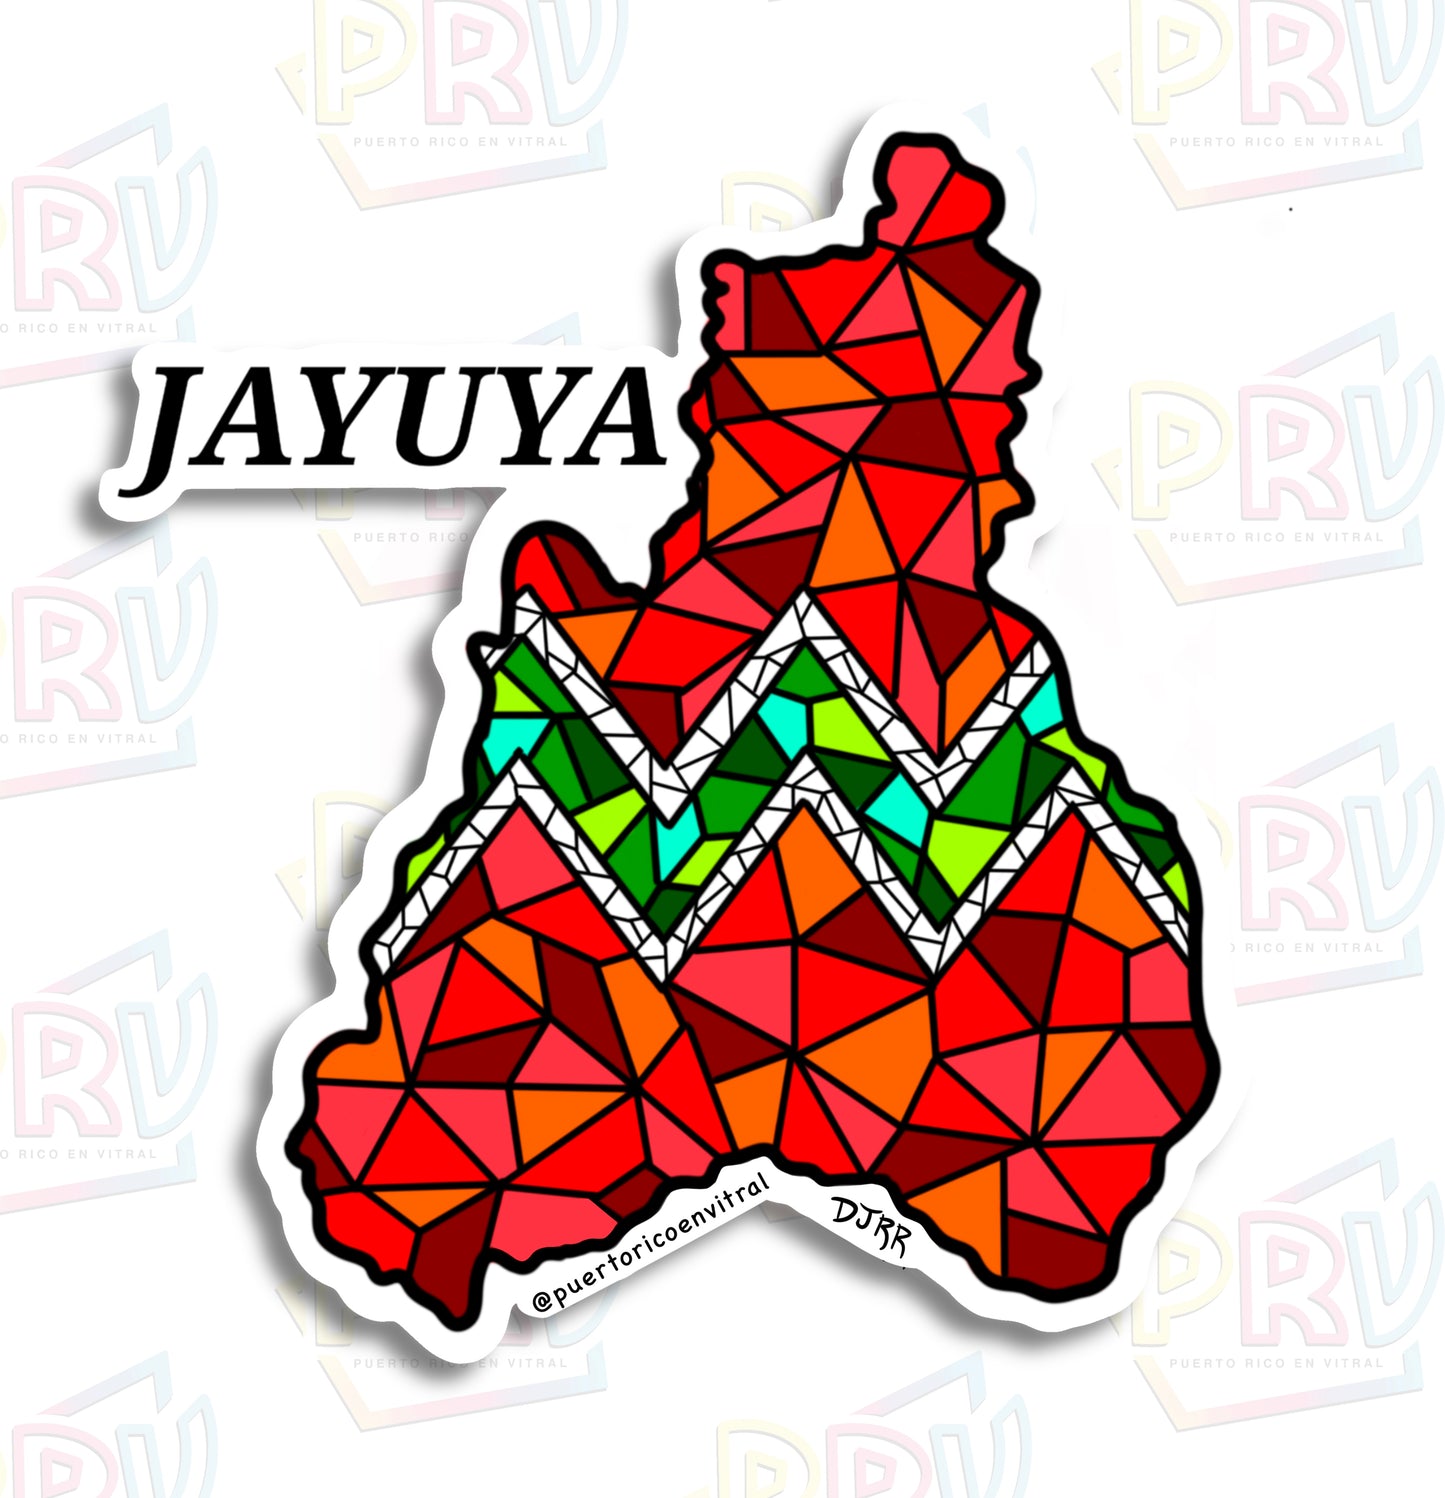 Jayuya PR (Sticker)